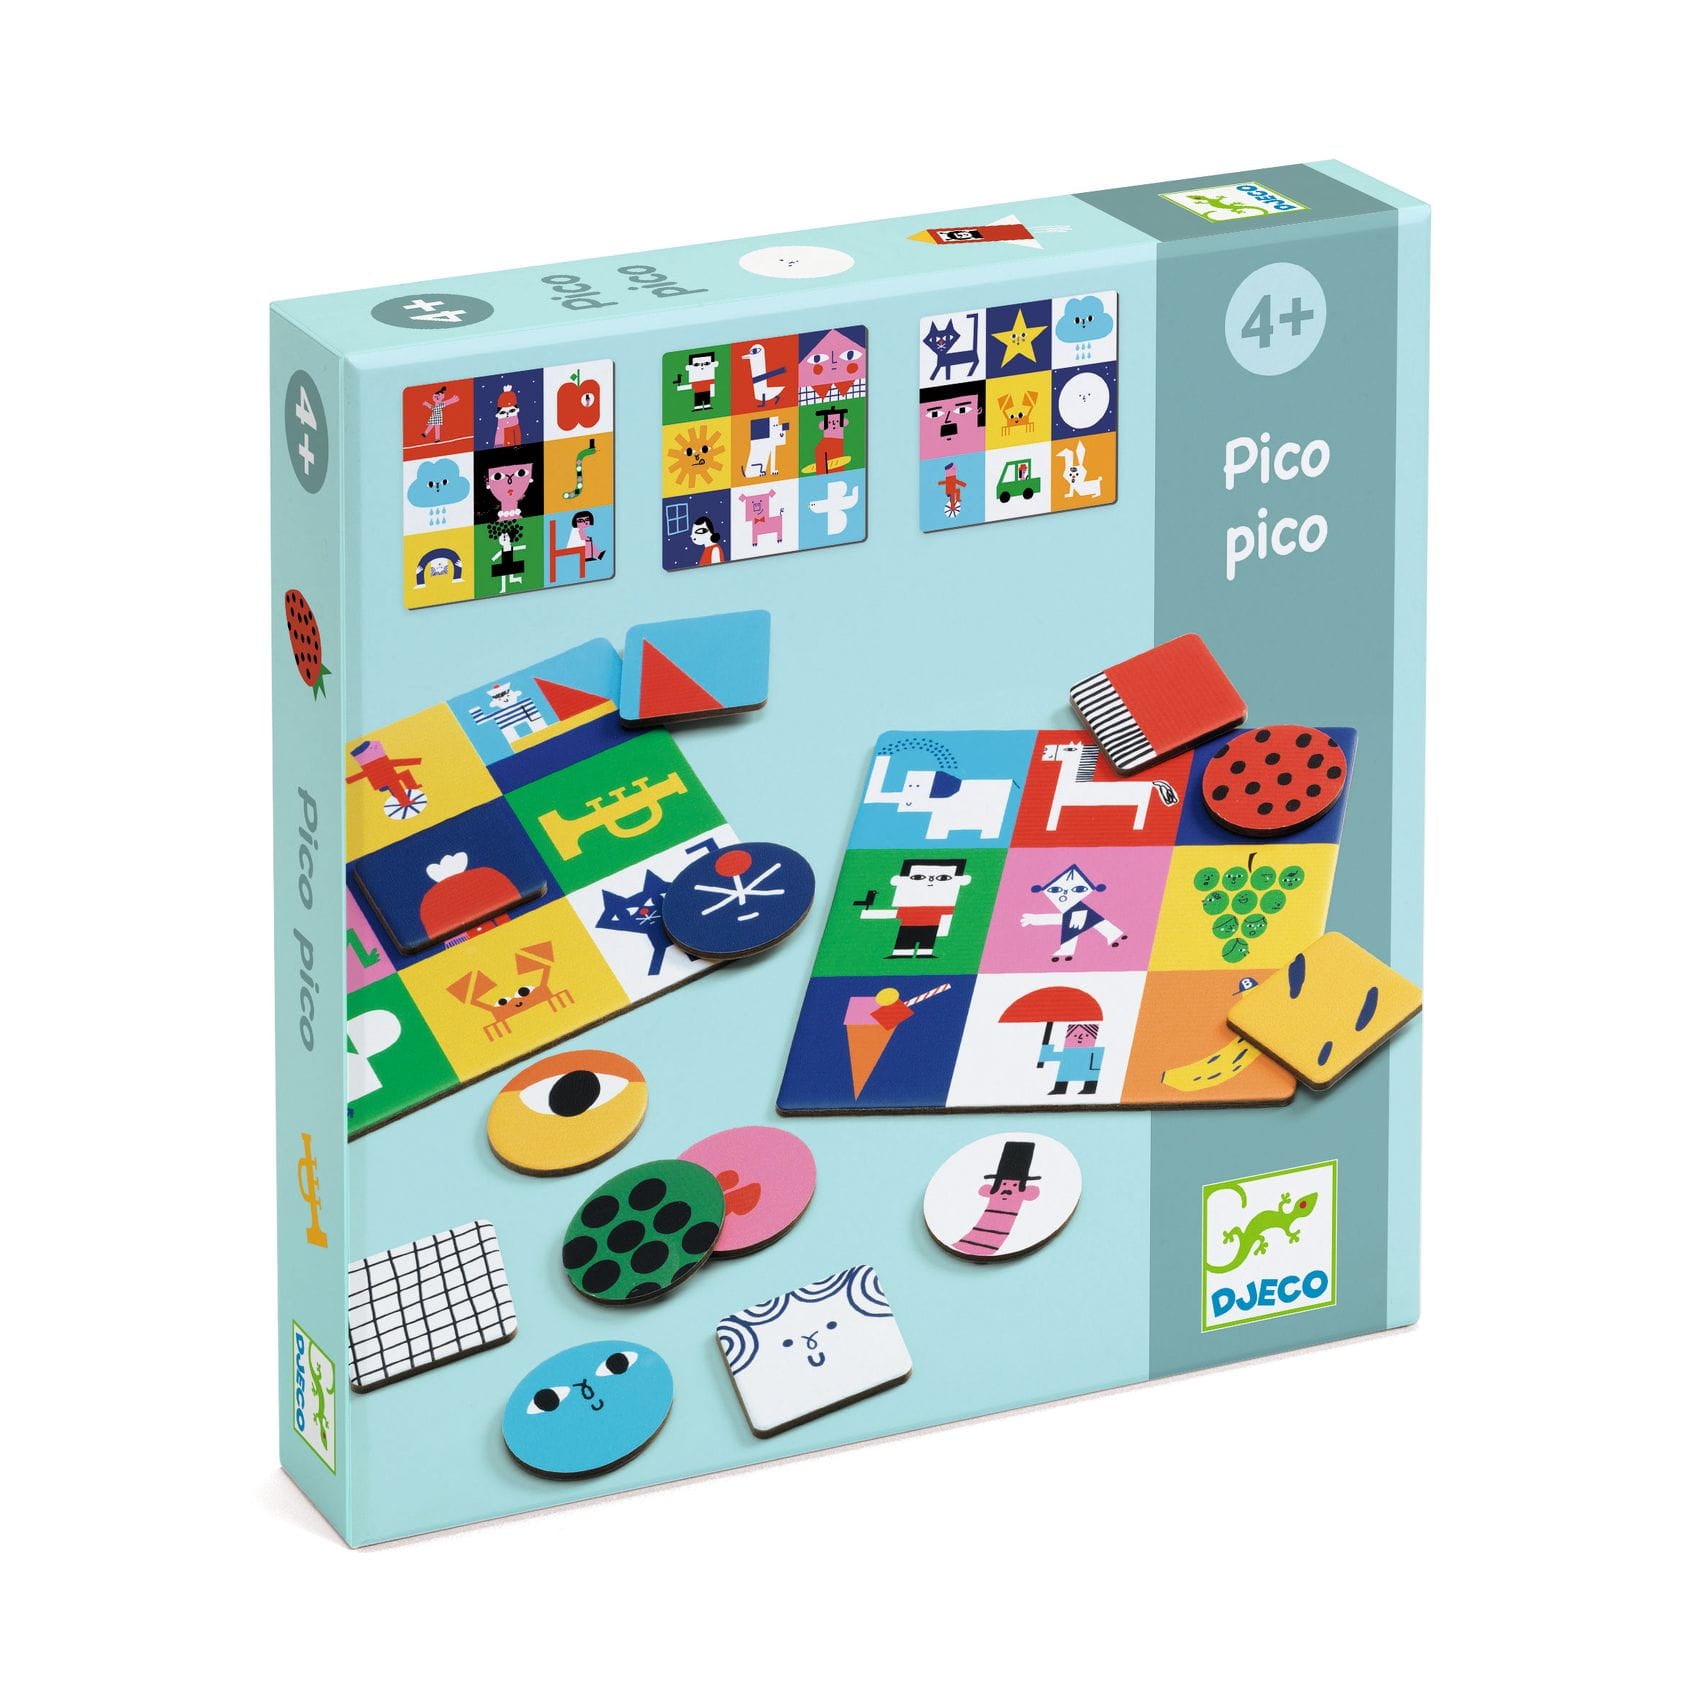 Djeco: Loto Pico Pico educational game